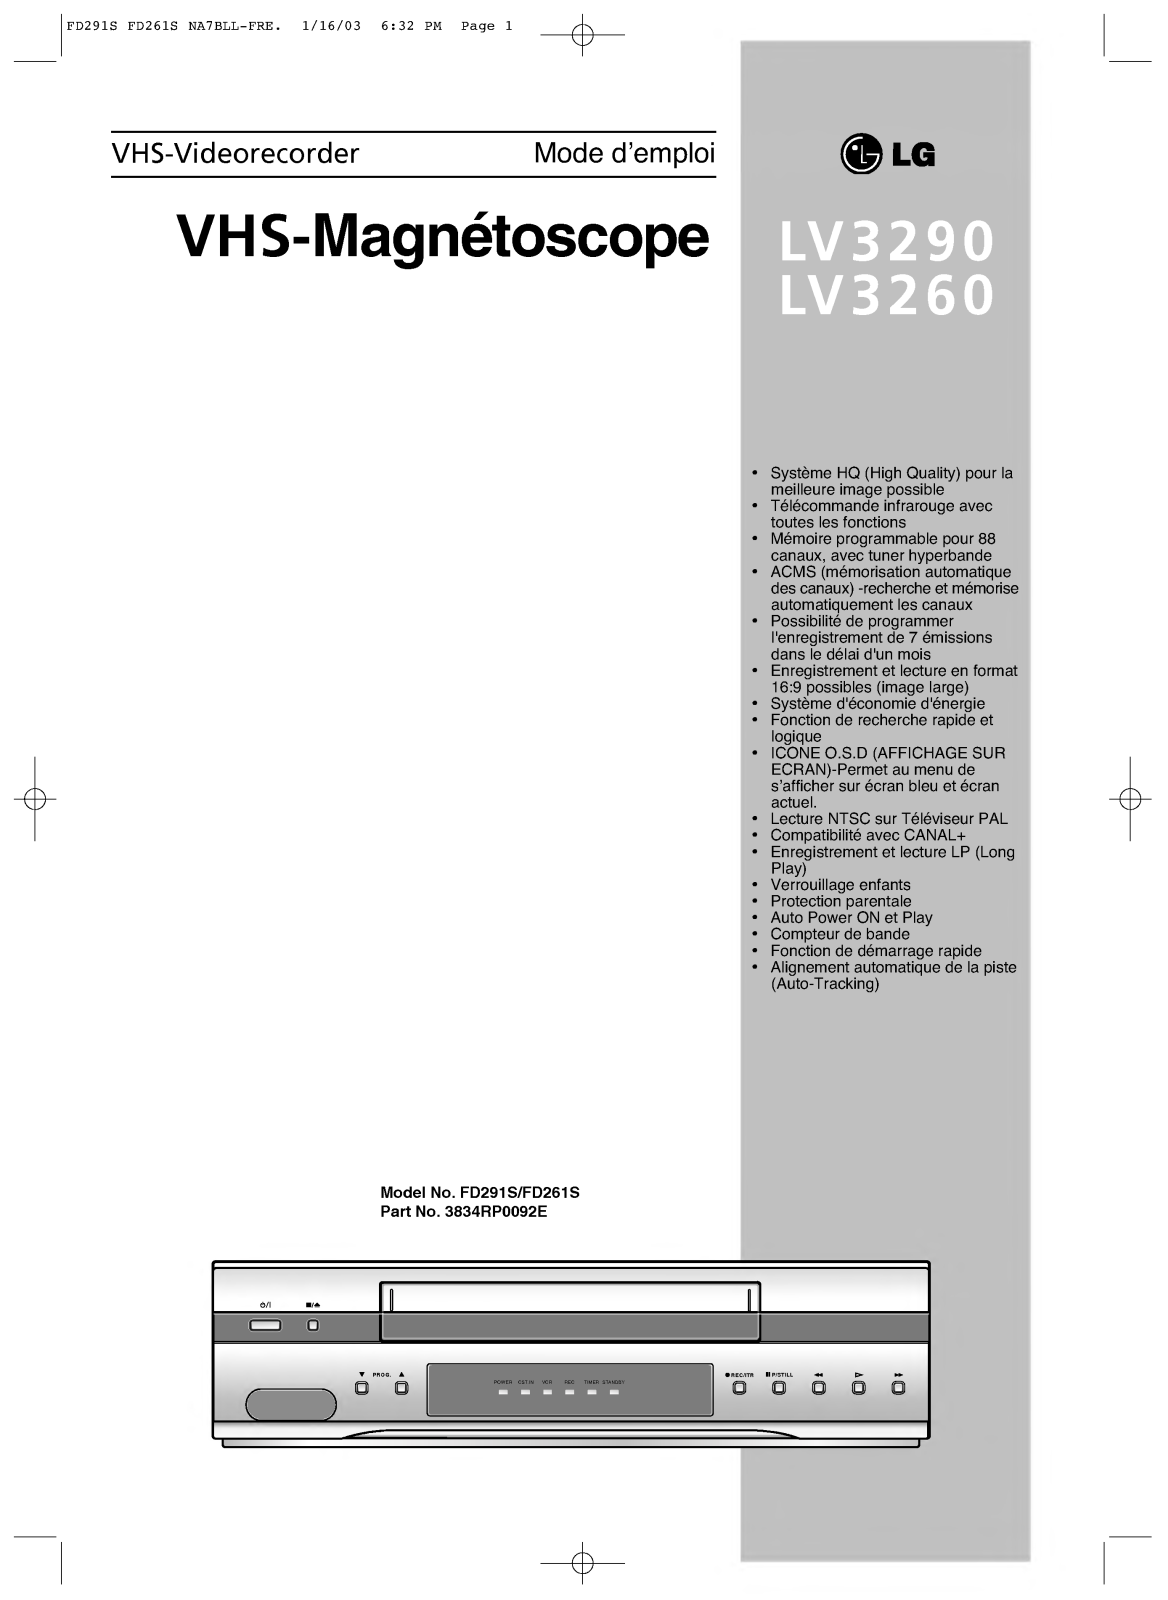 LG LV3290 User Manual